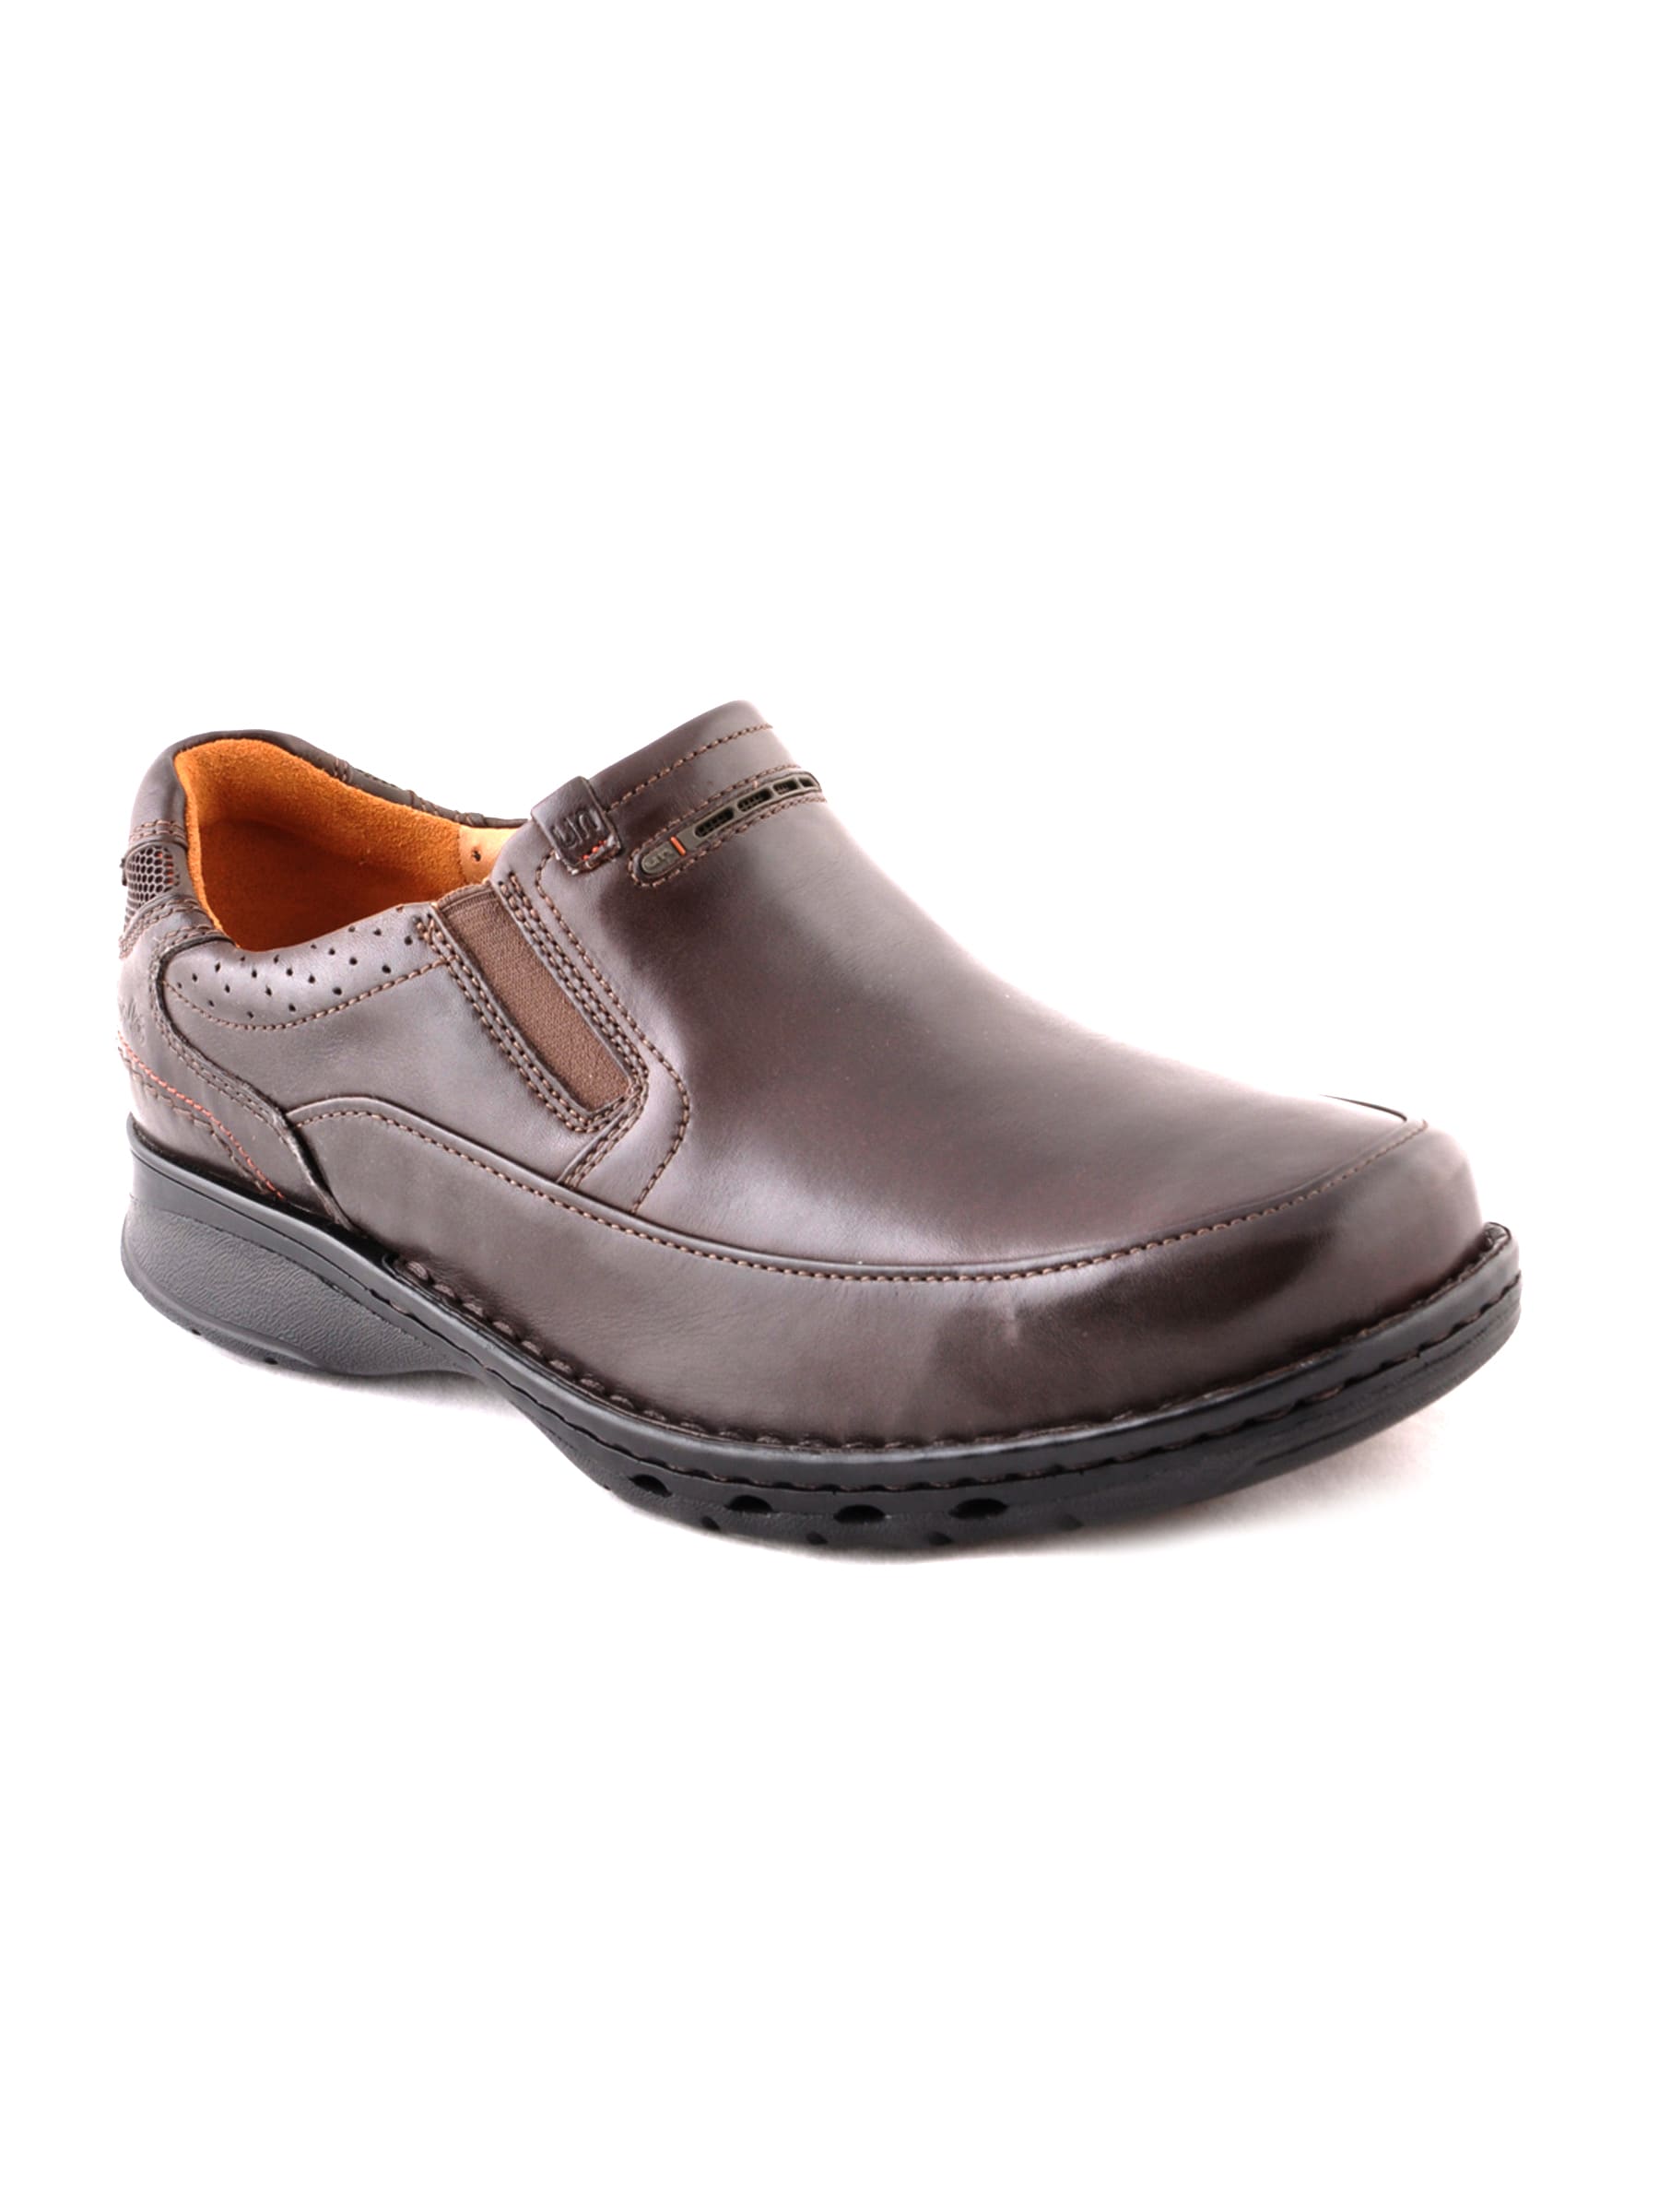 Clarks Men Leather Brown Formal Shoes